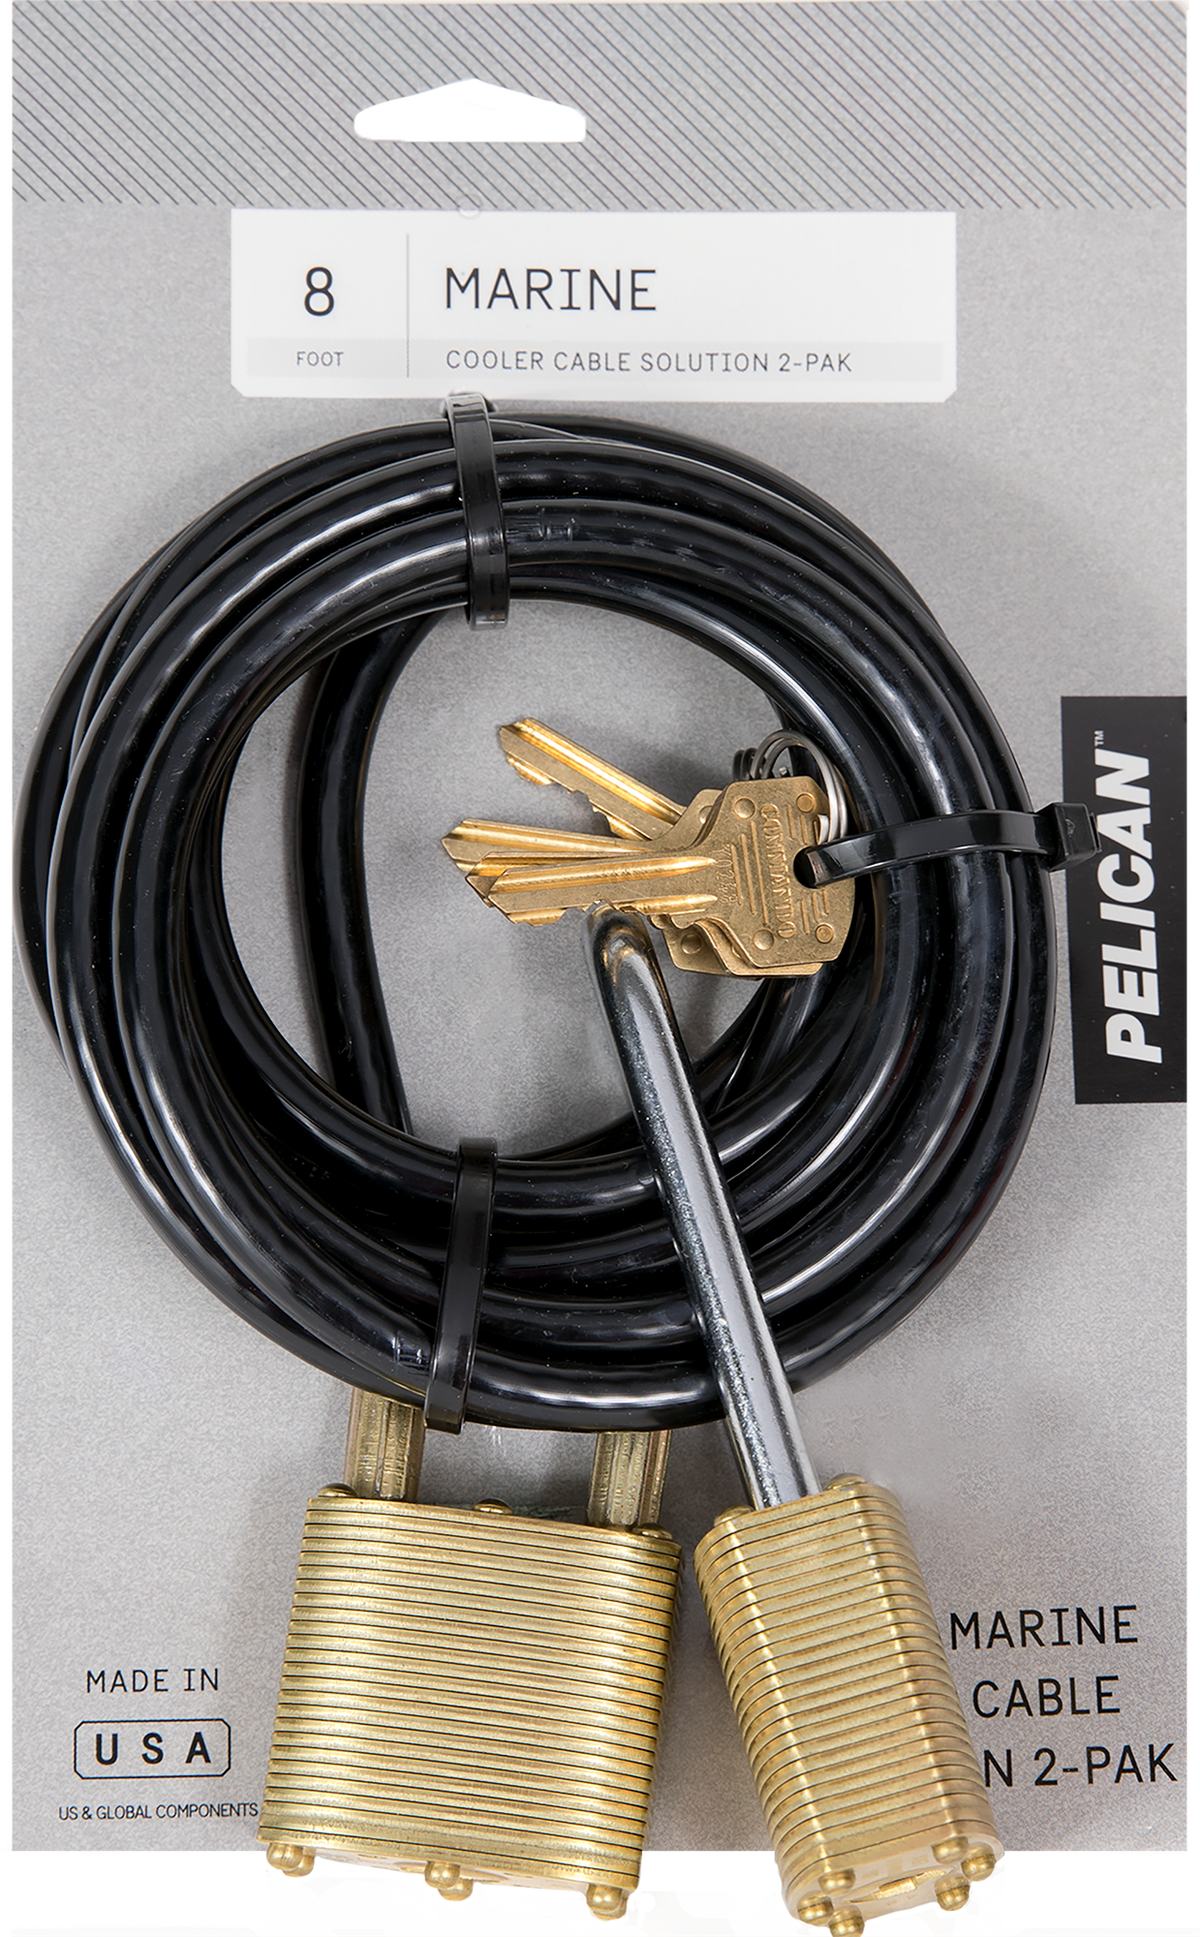 Pelican™ Marine Cable Lock